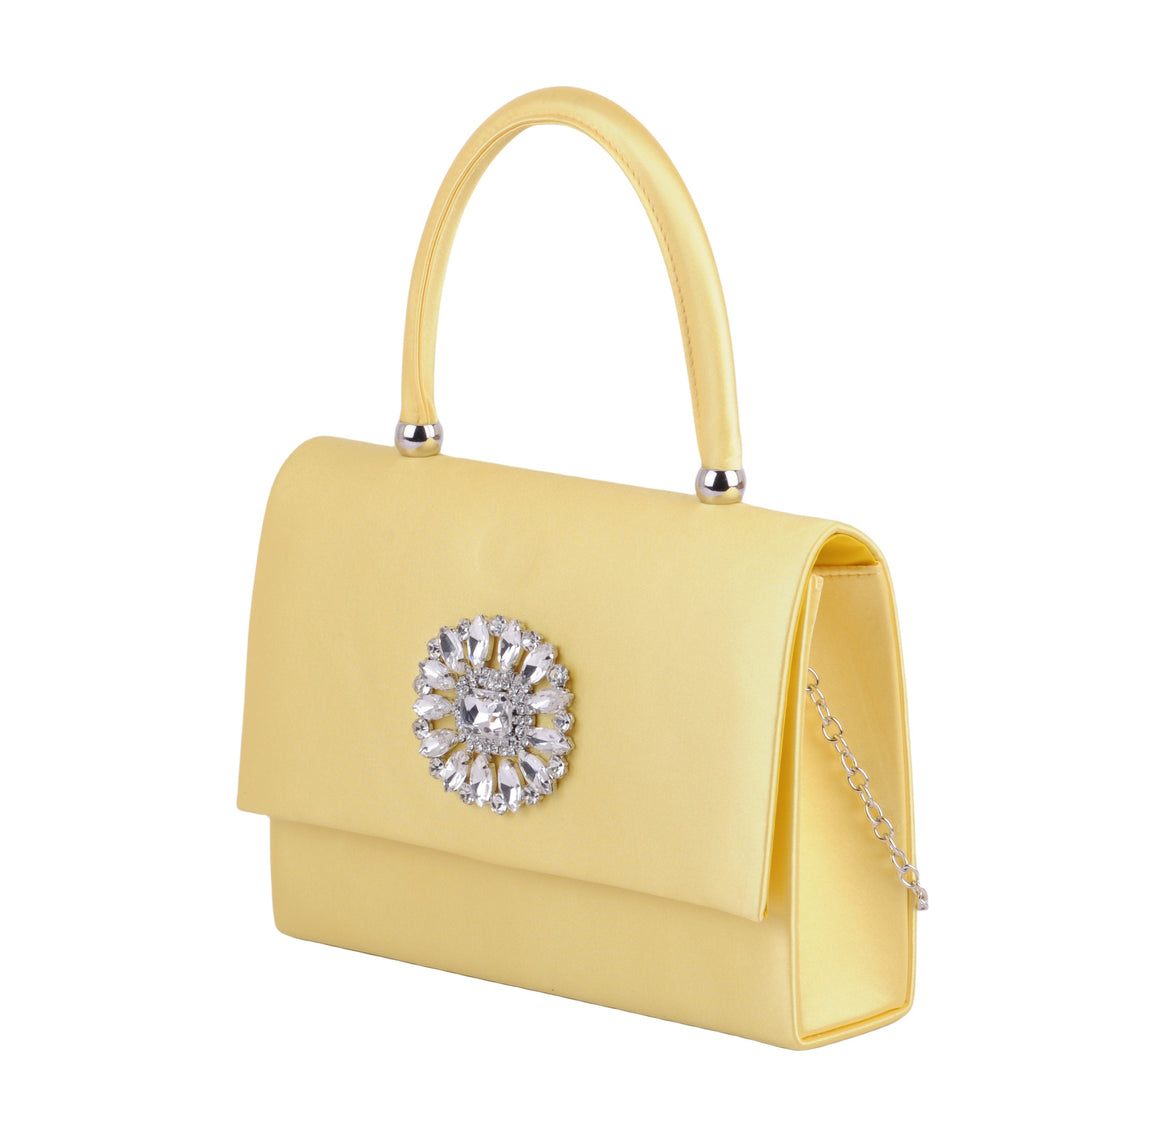 1556 - Cheerful Yellow Satin Satchel Crossbody Bag w Floral Accent